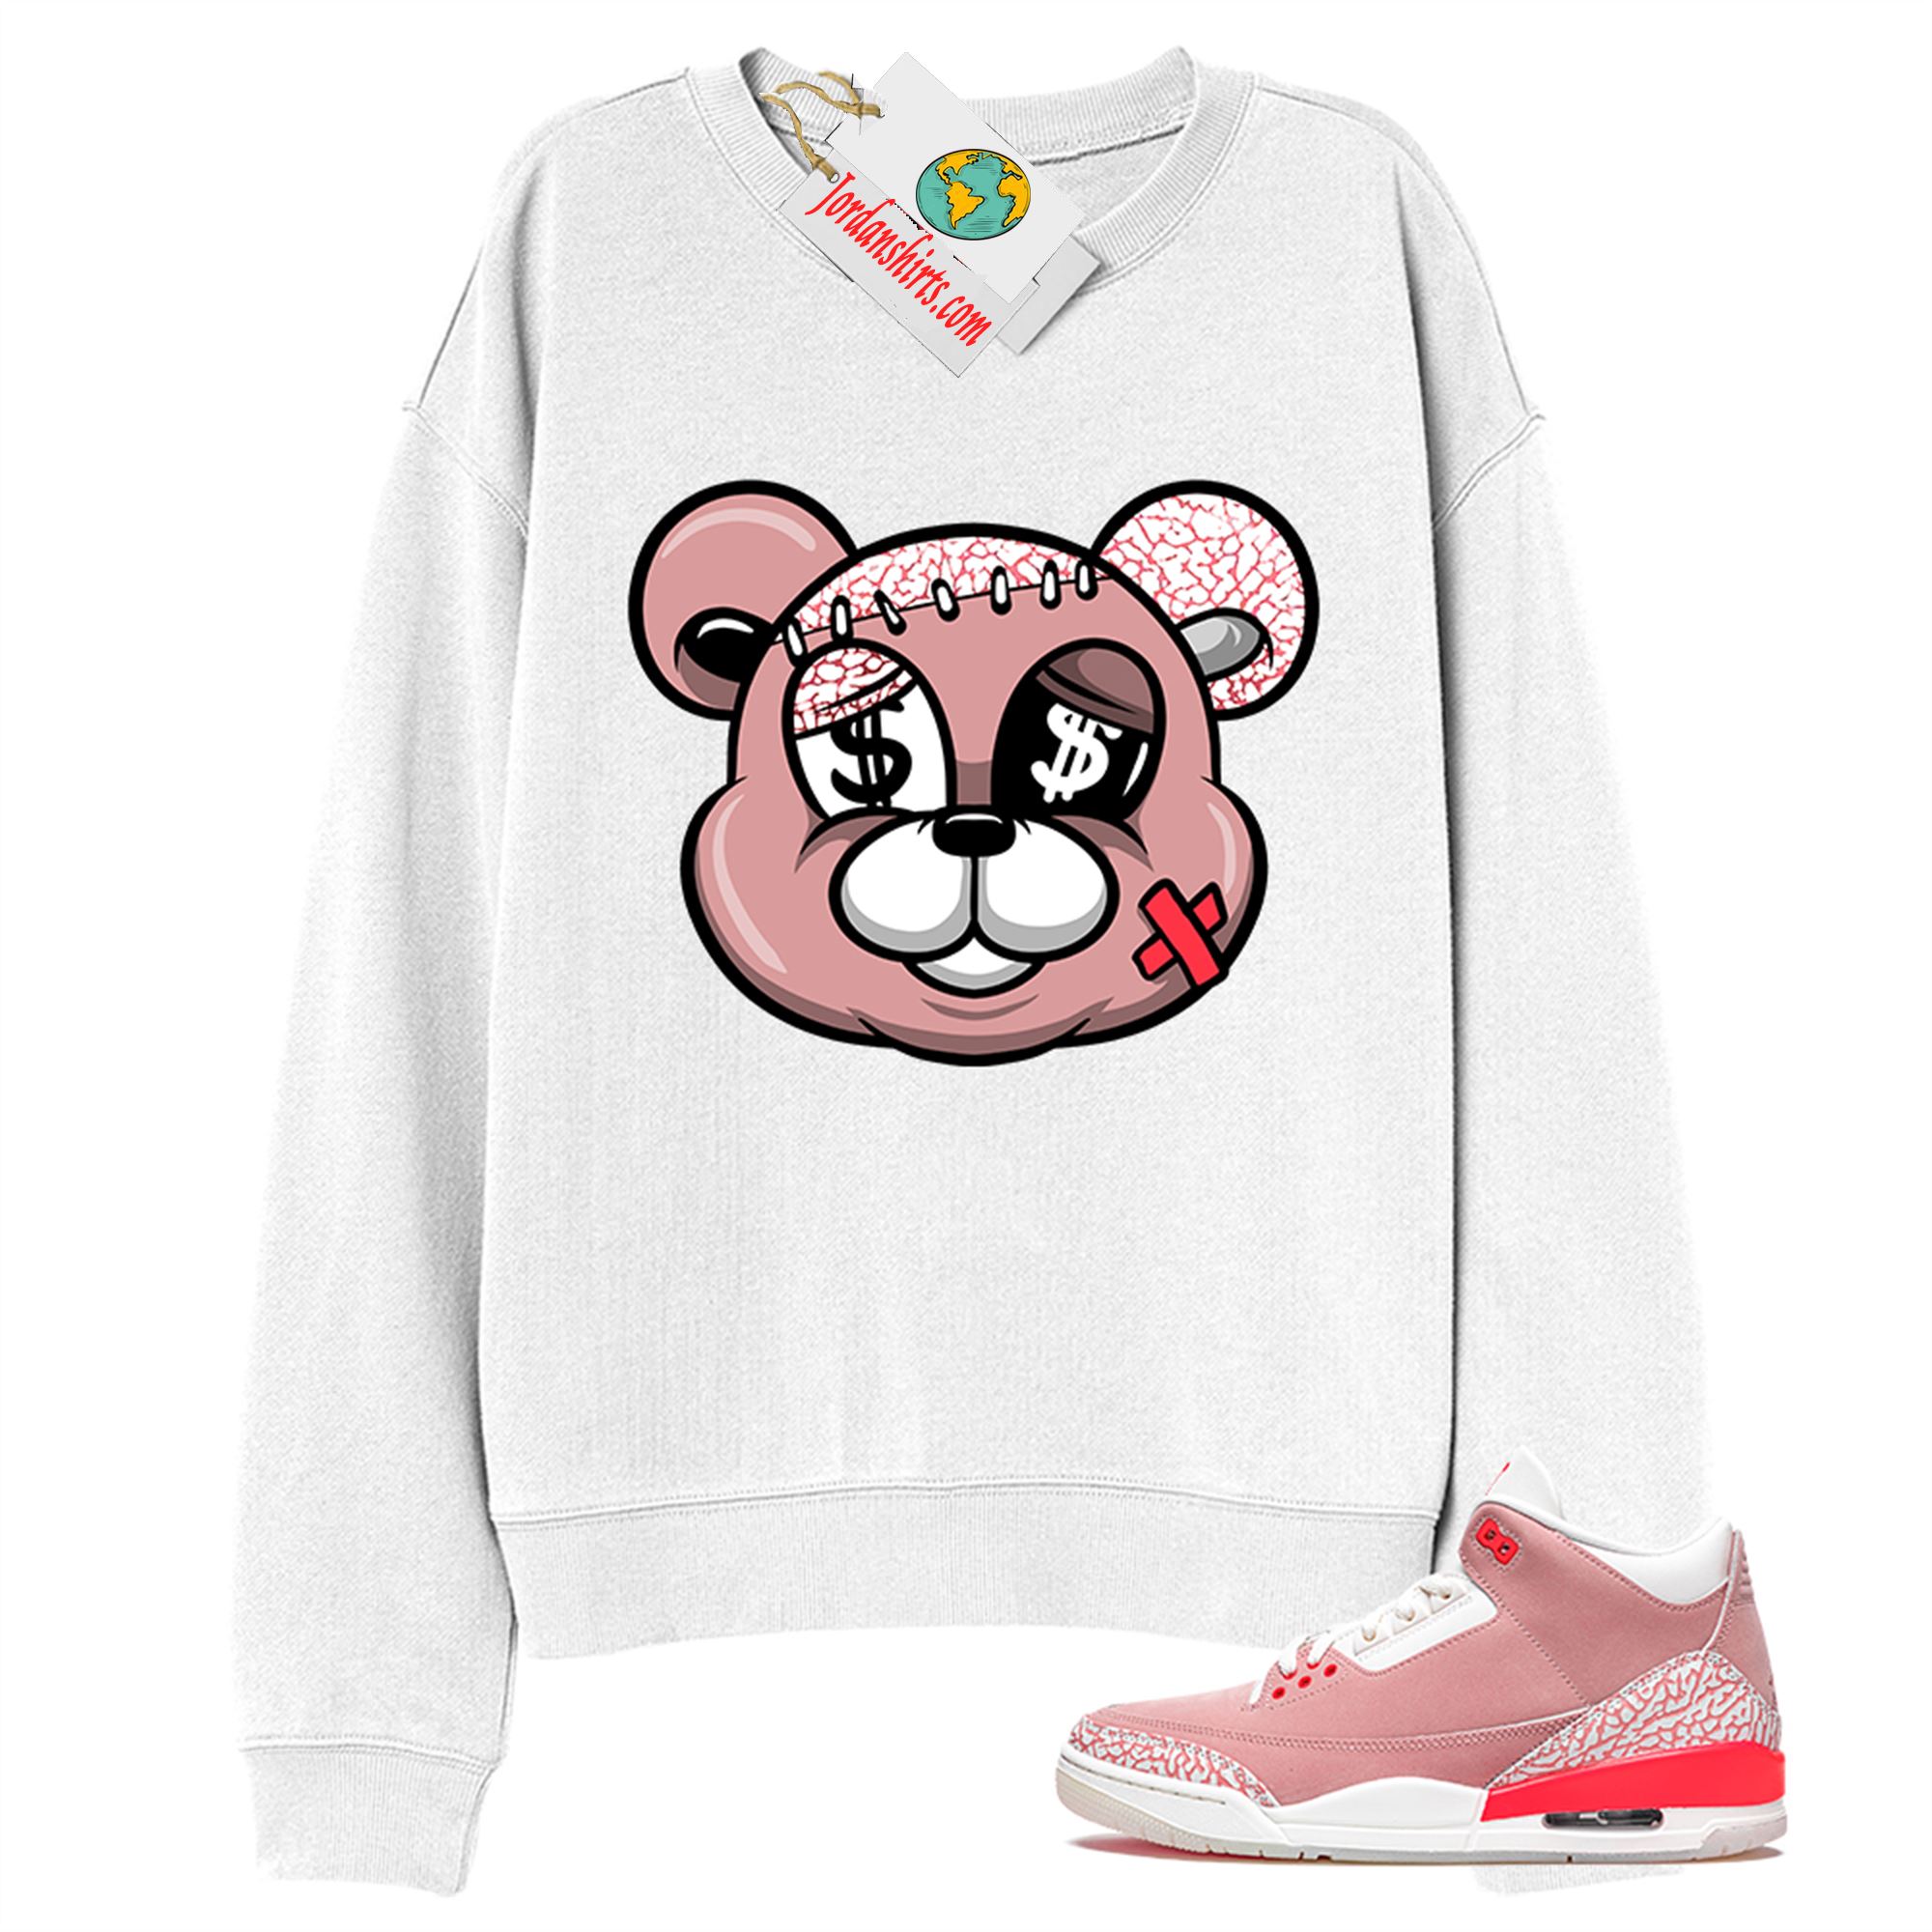 Jordan 3 Sweatshirt, Teddy With Money White Sweatshirt Air Jordan 3 Rust Pink 3s Full Size Up To 5xl